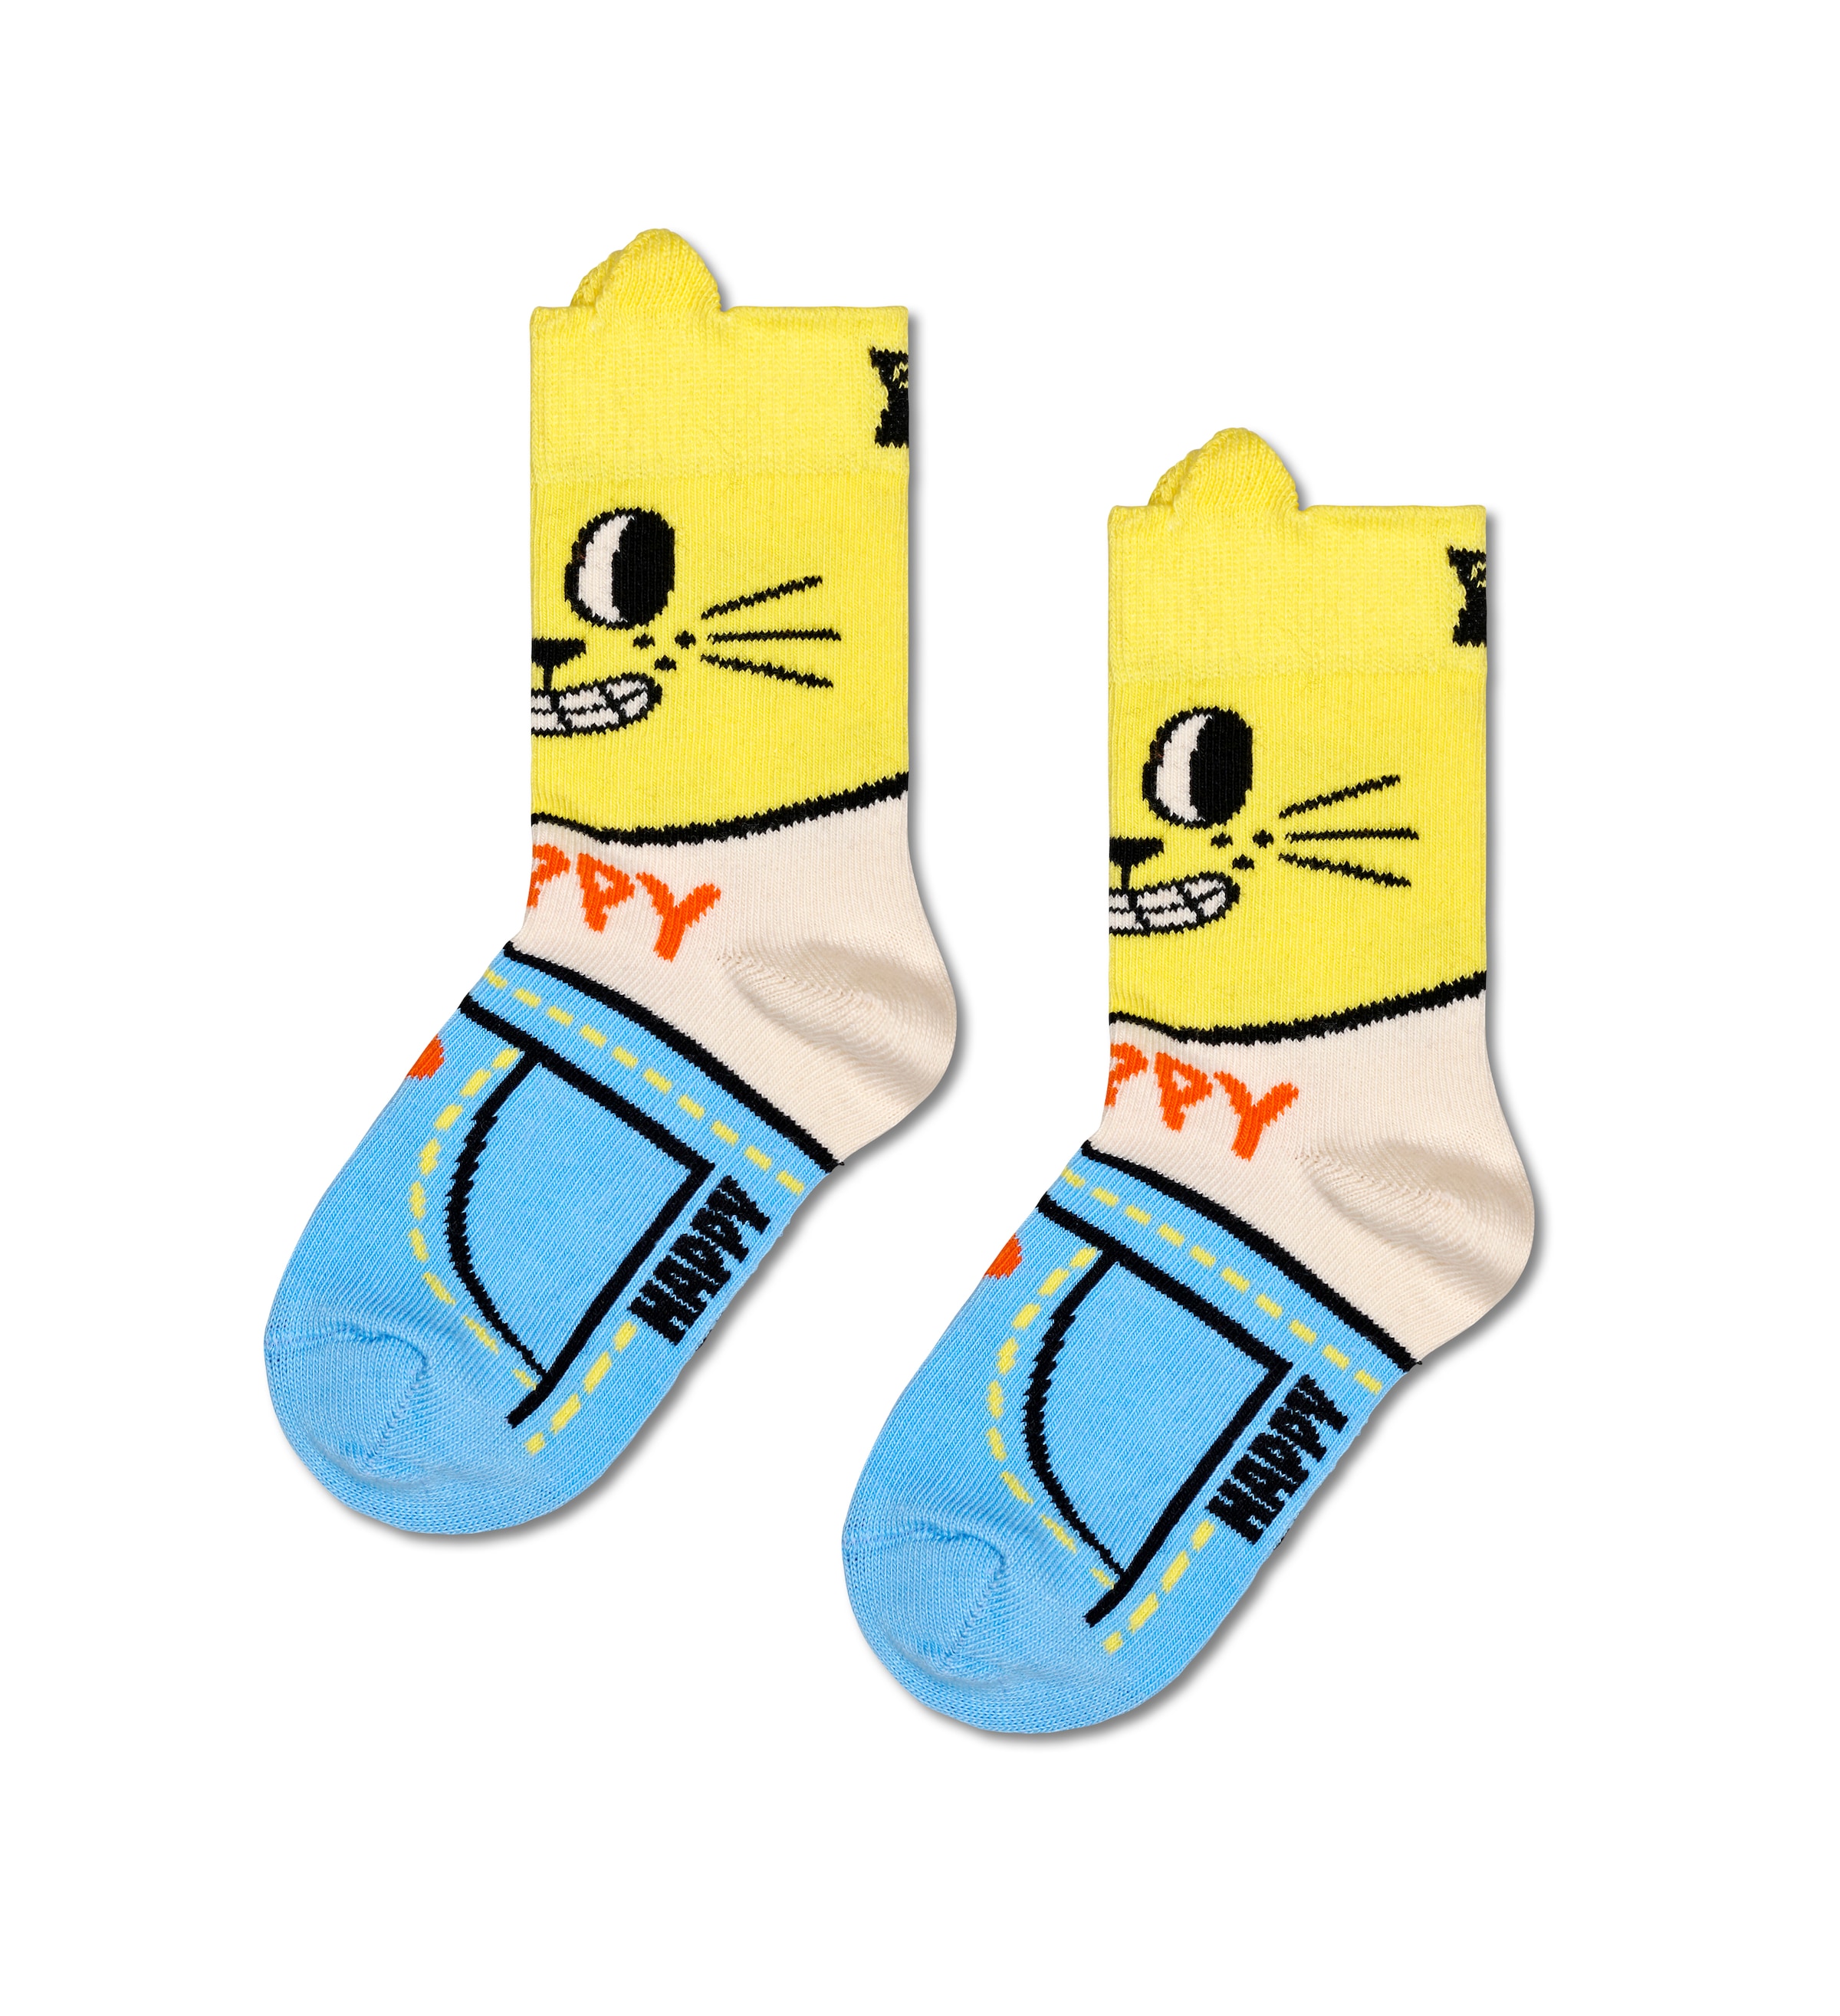 Set bestellen Gift (3 BAUR Happy | Paar), Animal Socken, Socks